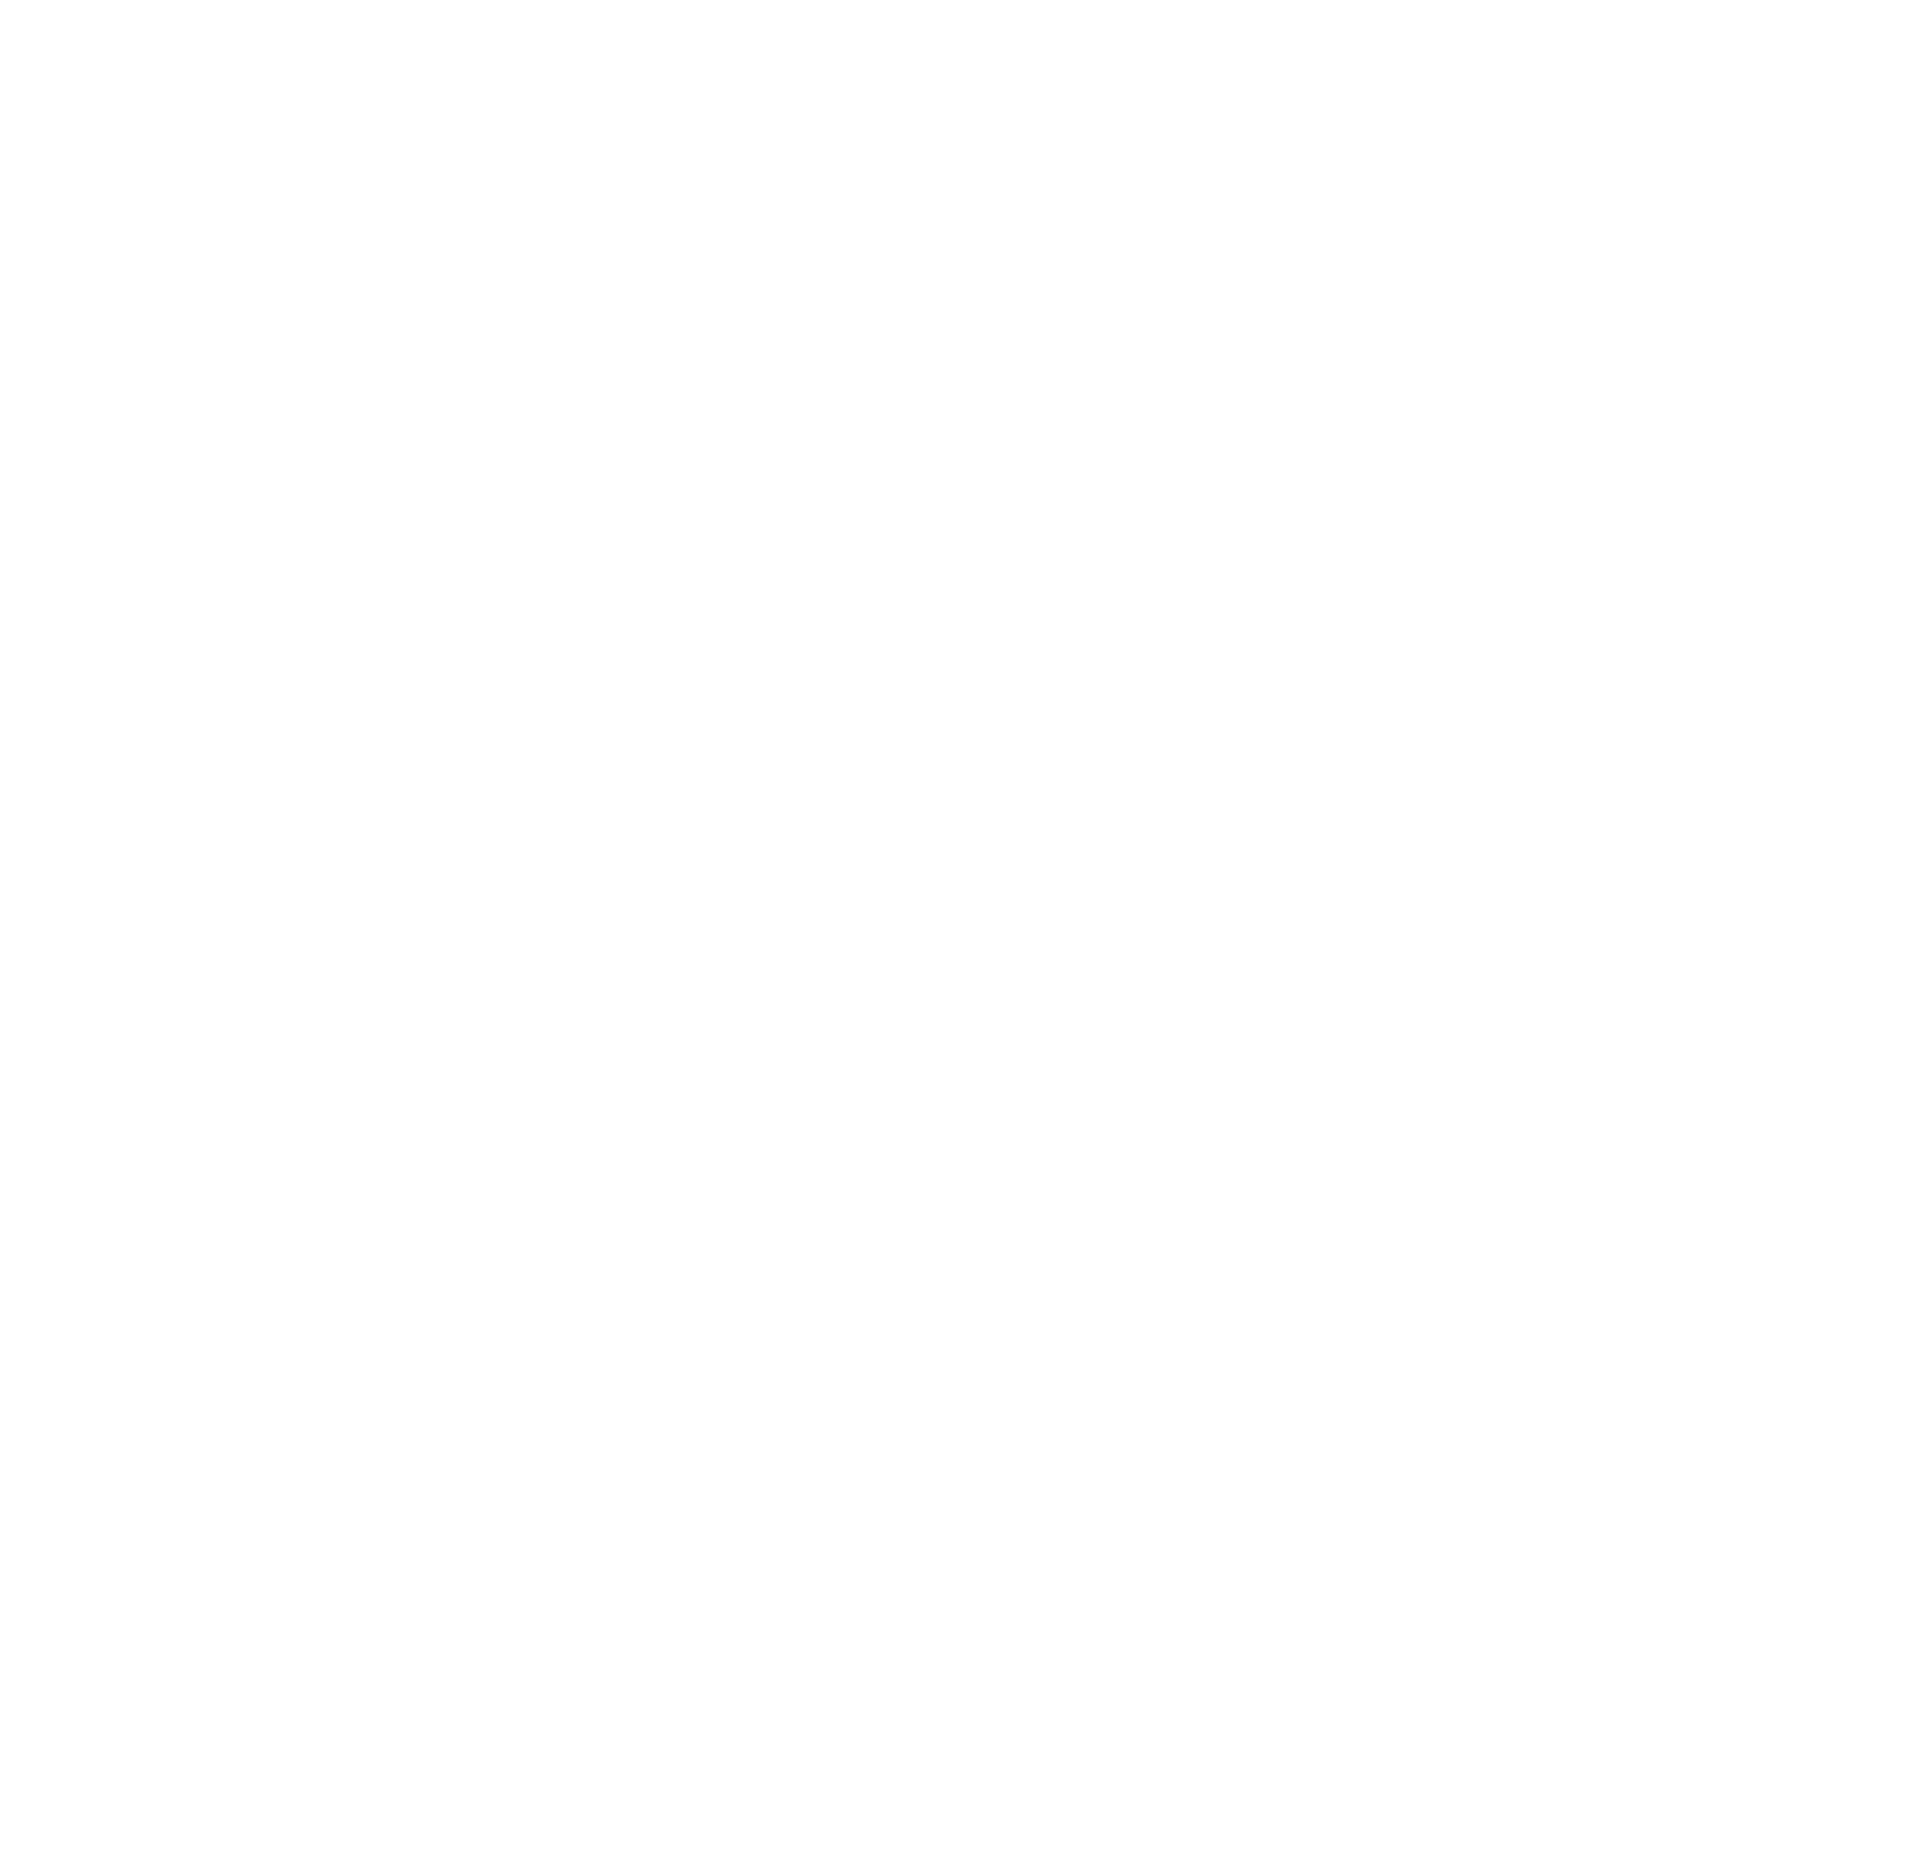 Higgins Funeral Home